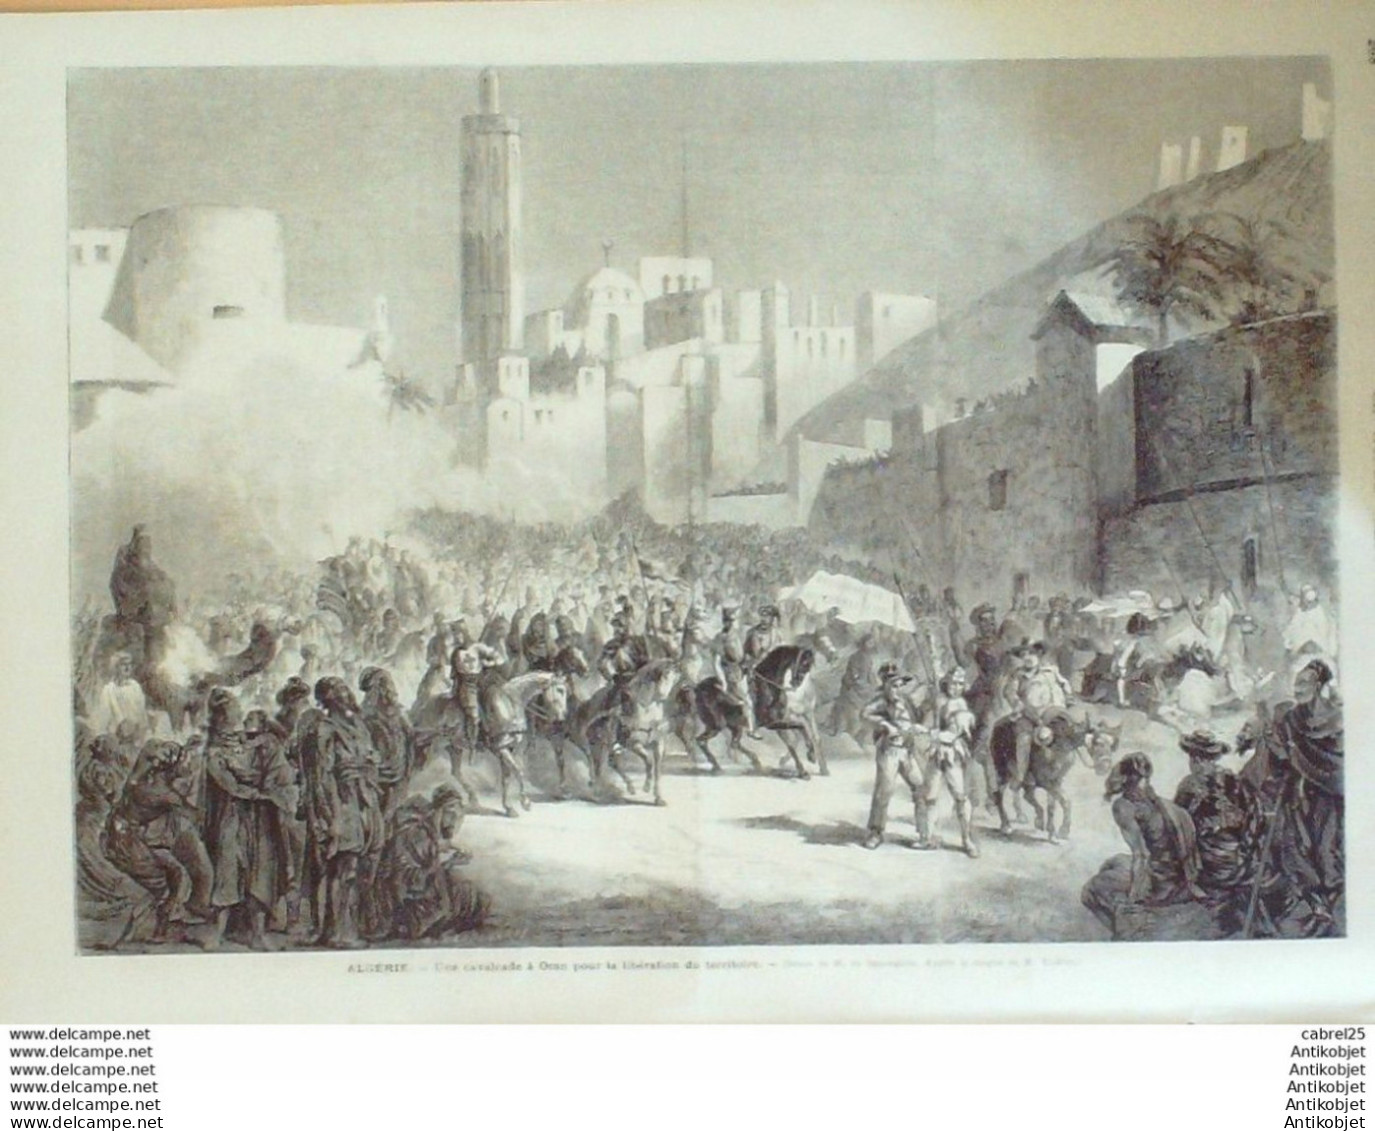 Le Monde Illustré 1872 N°786 Espagne Tarragona Guipuzcoa Algérie Oran Mulhouse (68) Nantes (44) Italie Vesuve - 1850 - 1899